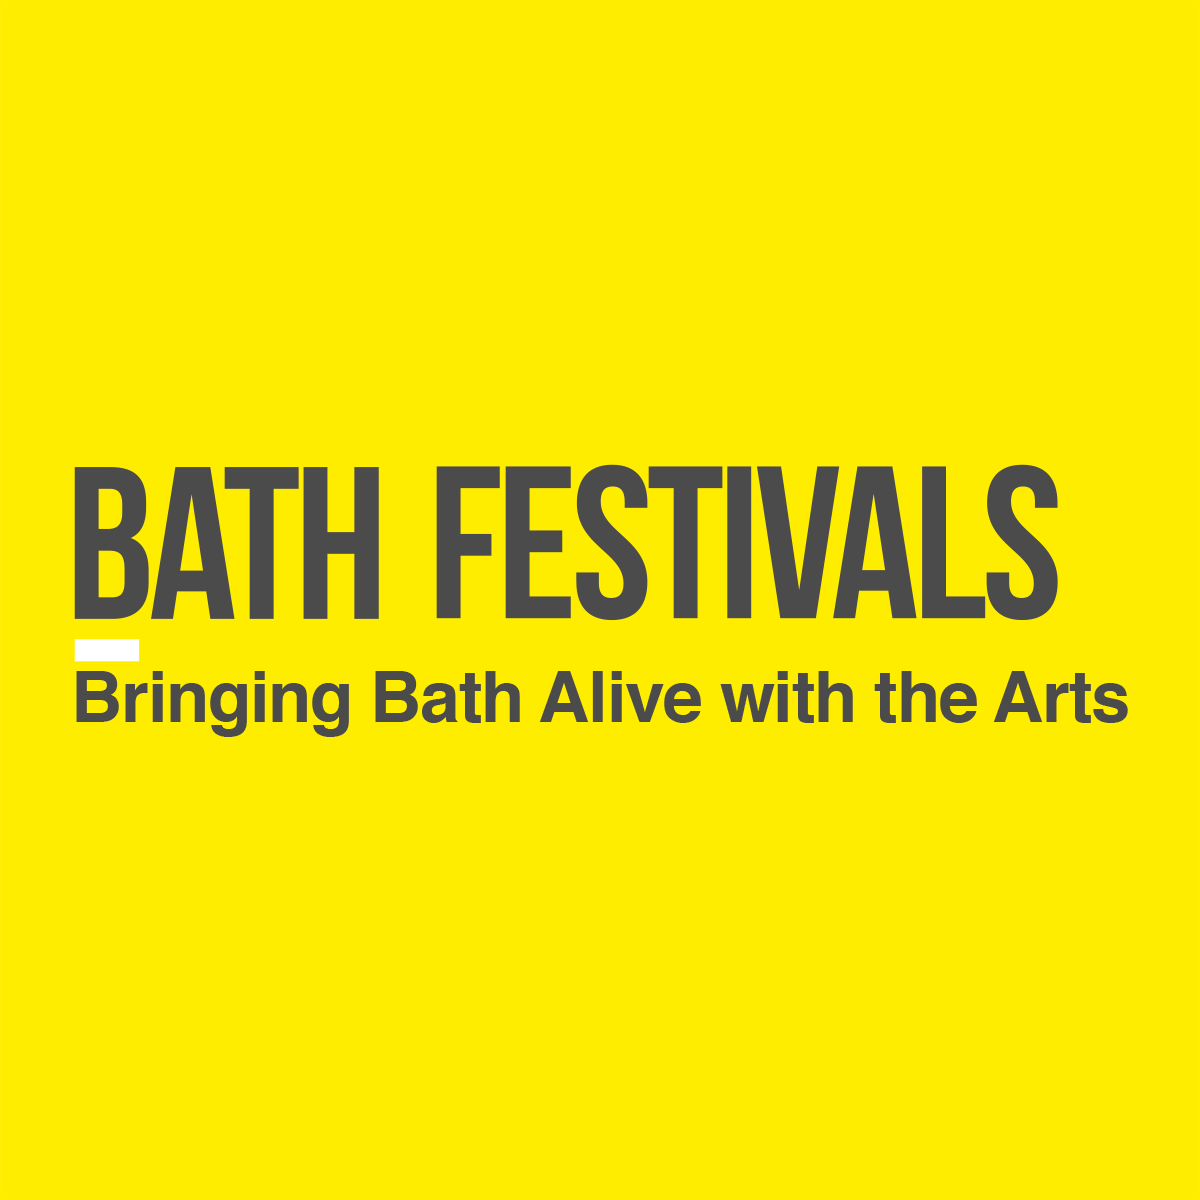 (c) Bathfestivals.org.uk